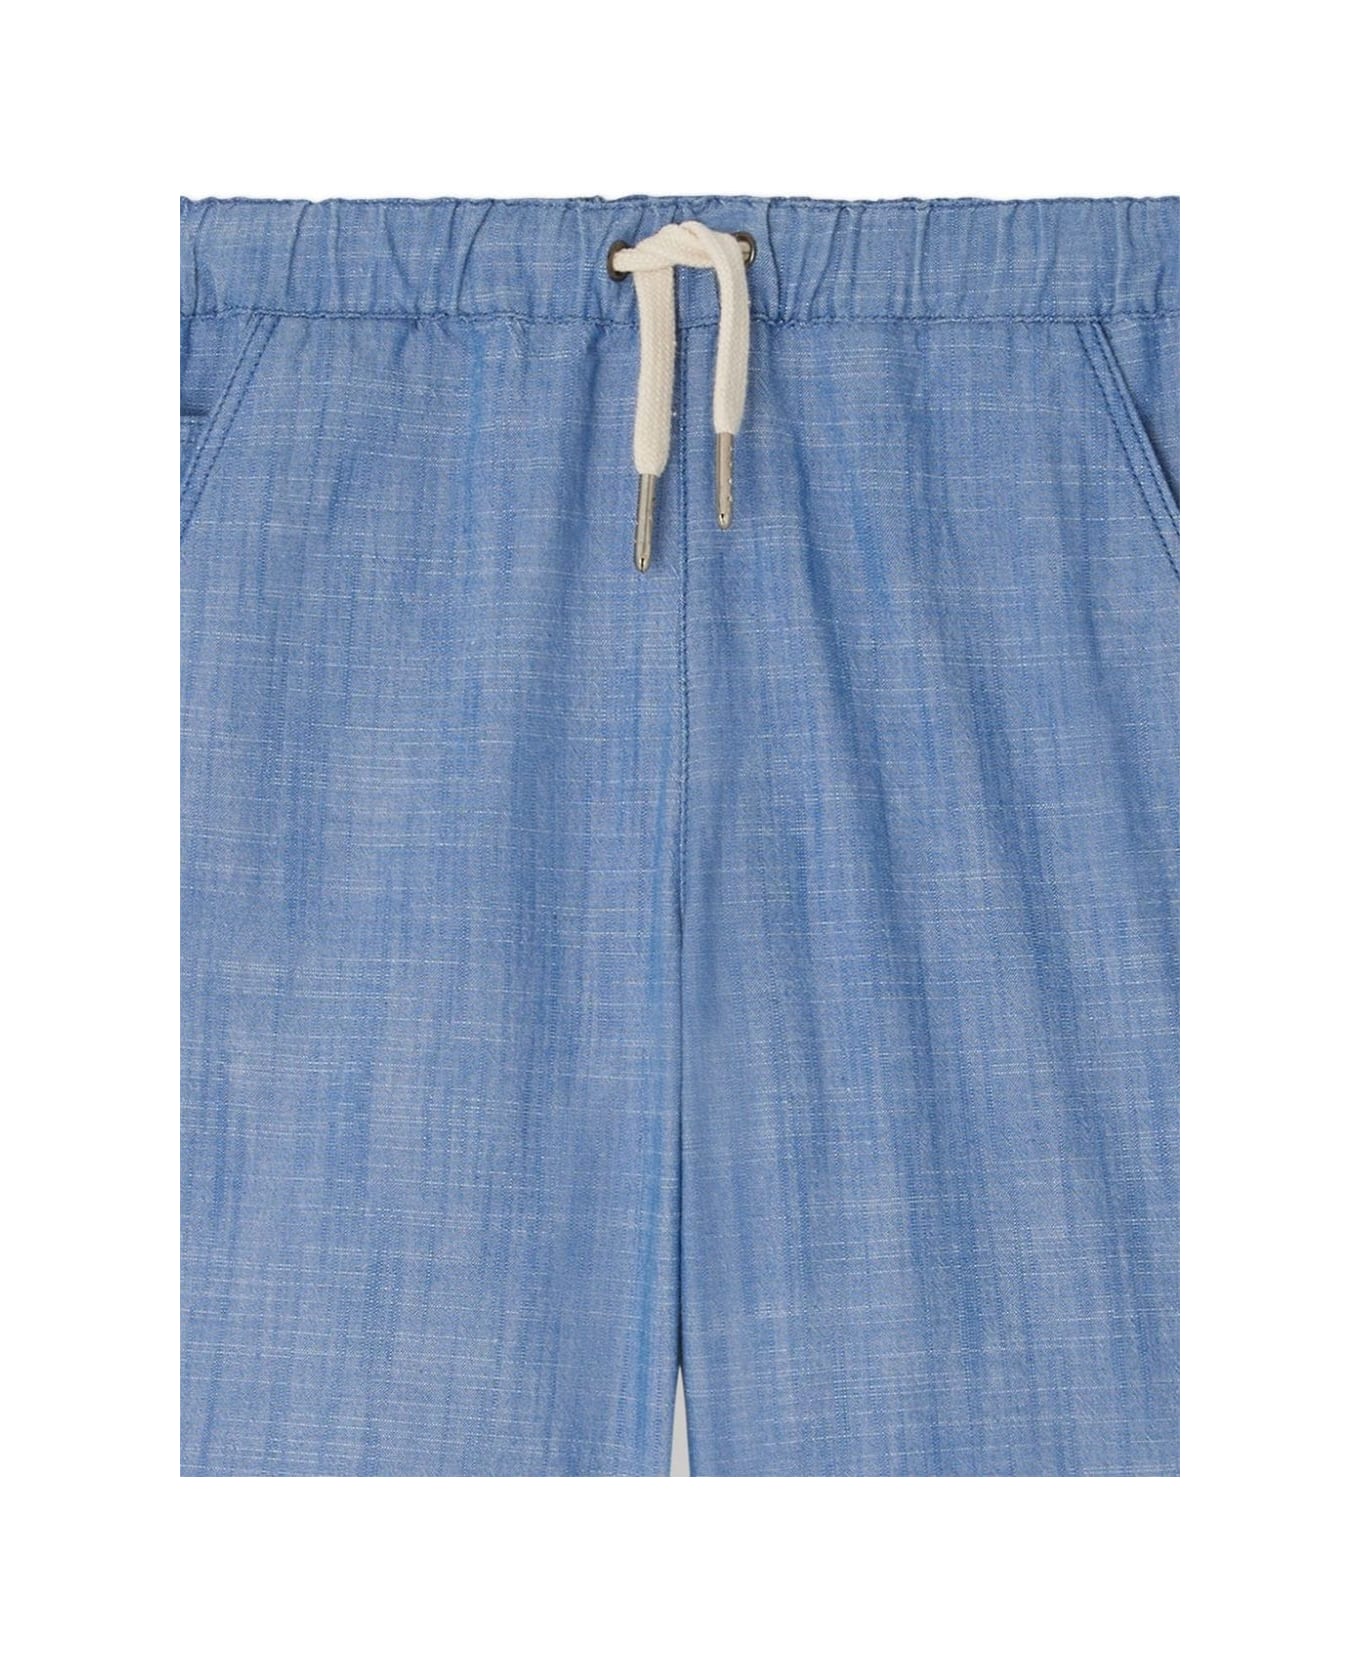 Bonpoint Blue Conway Shorts - Blue